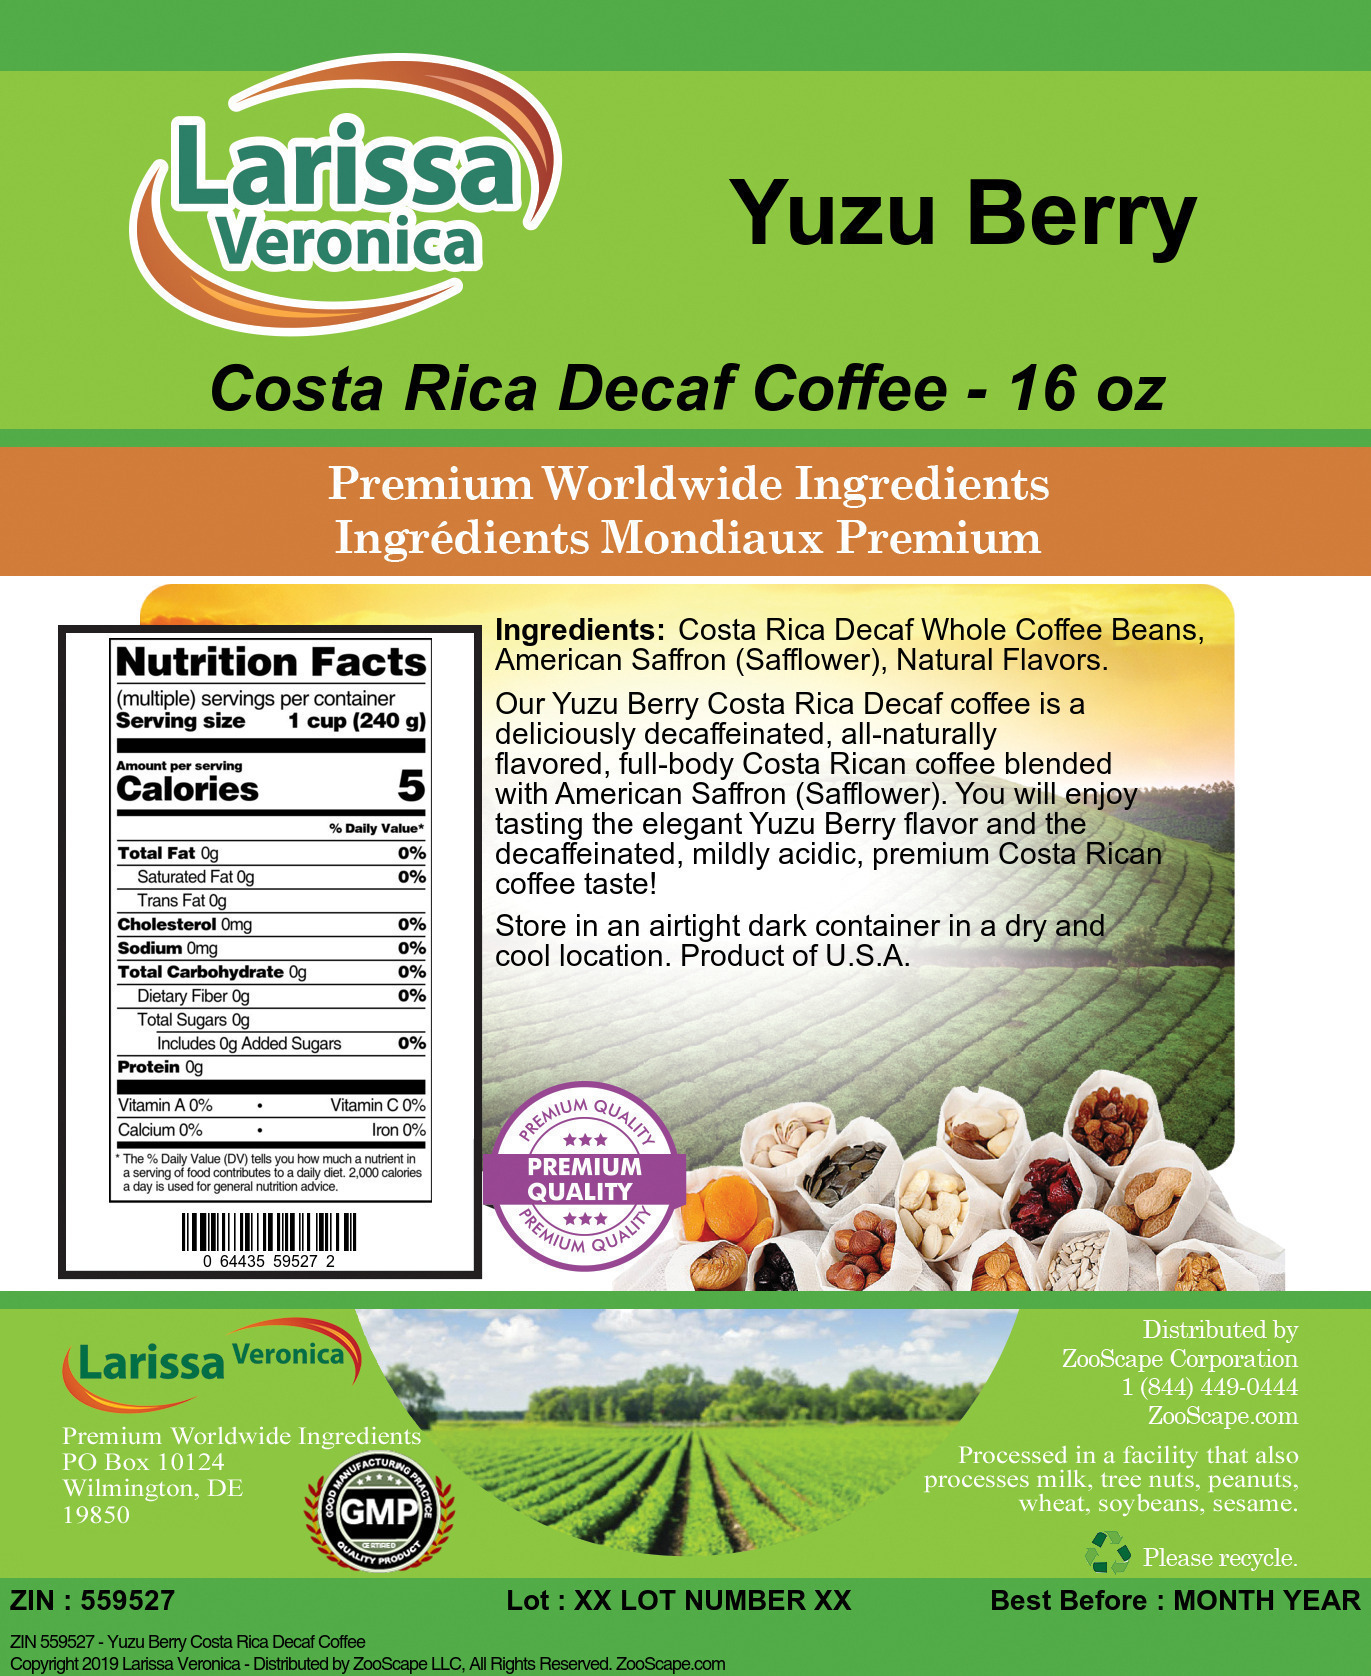 Yuzu Berry Costa Rica Decaf Coffee - Label